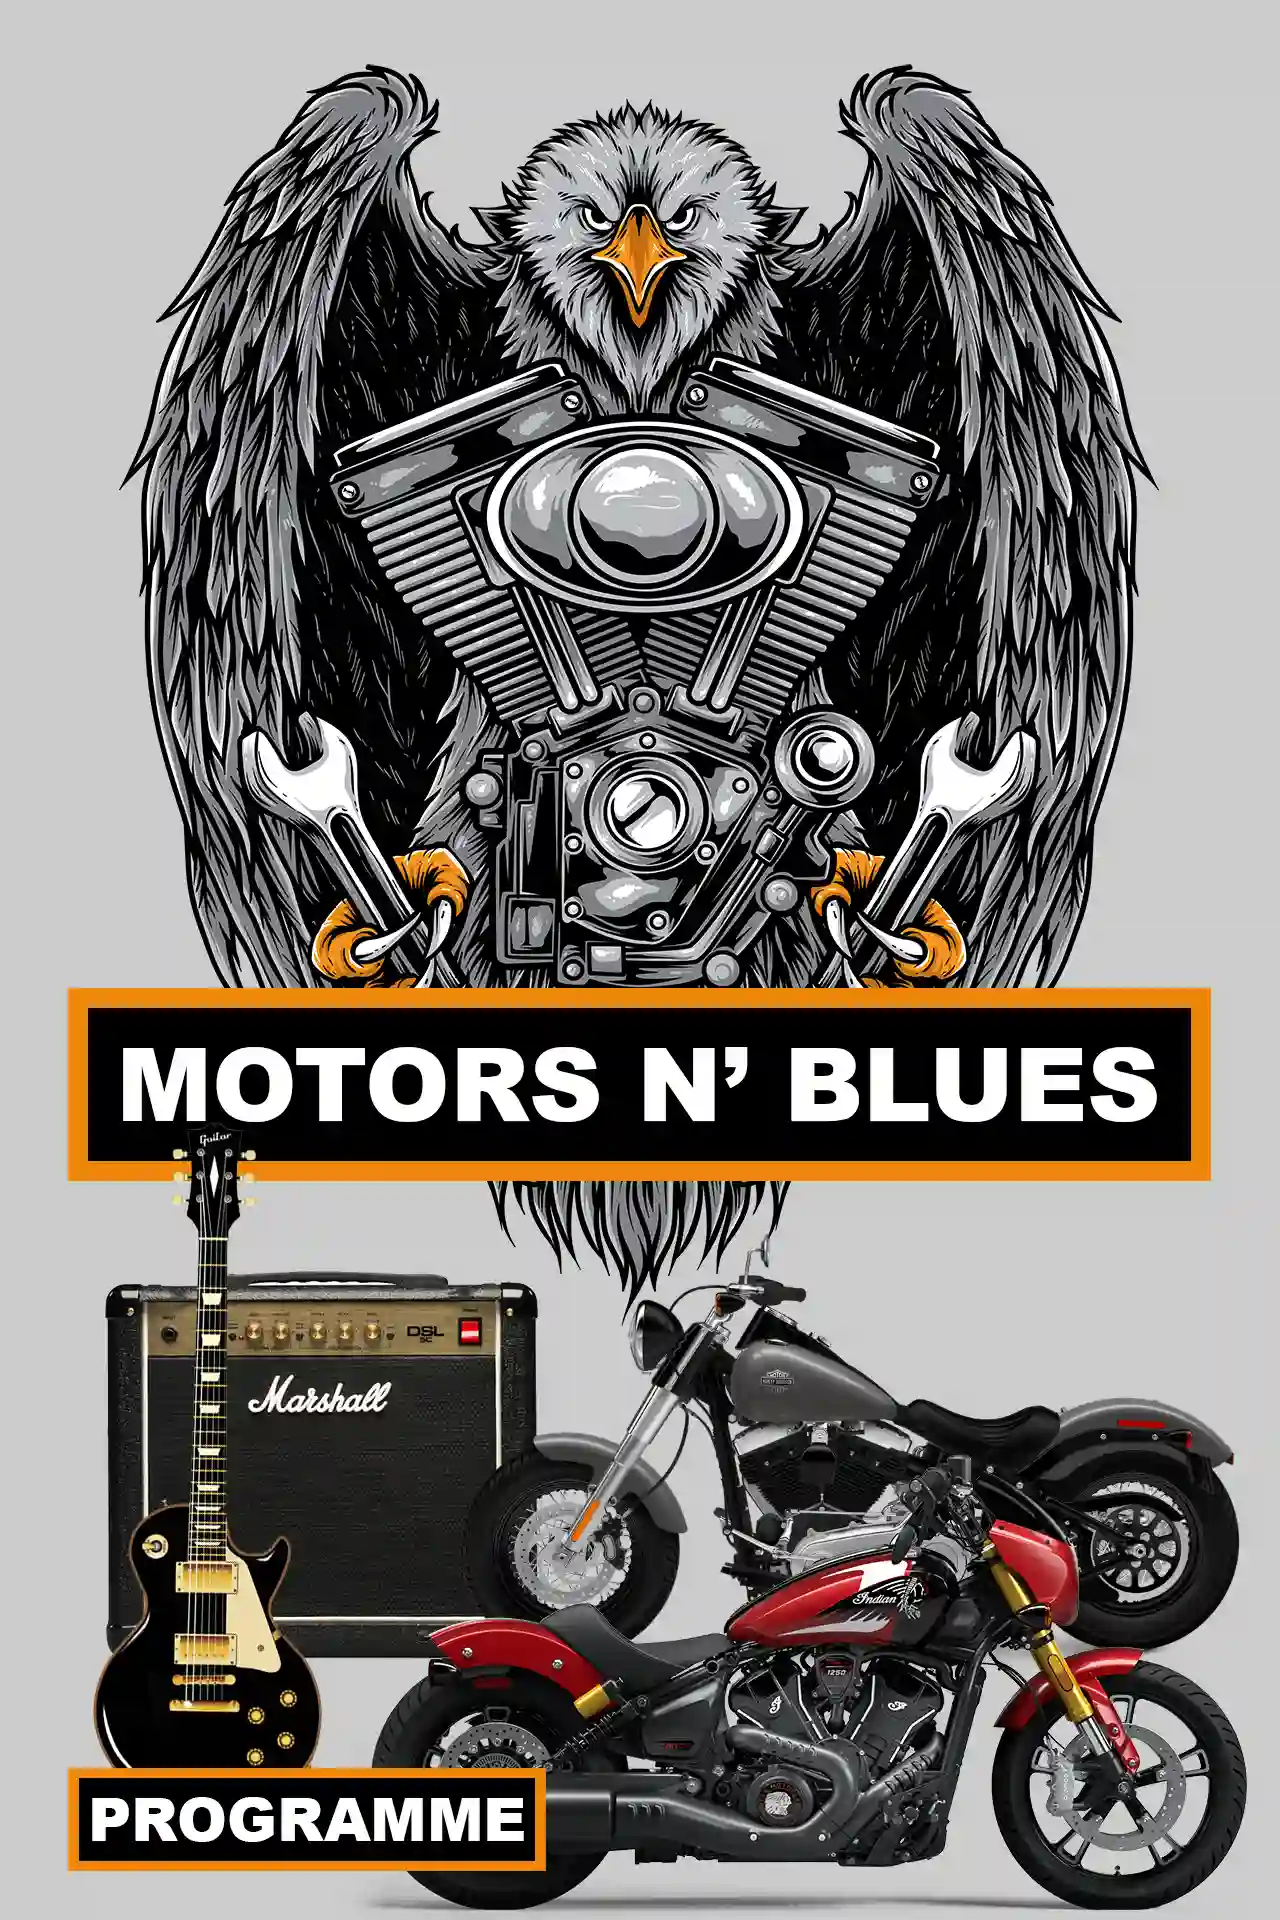 Programme du Motors n' Blues